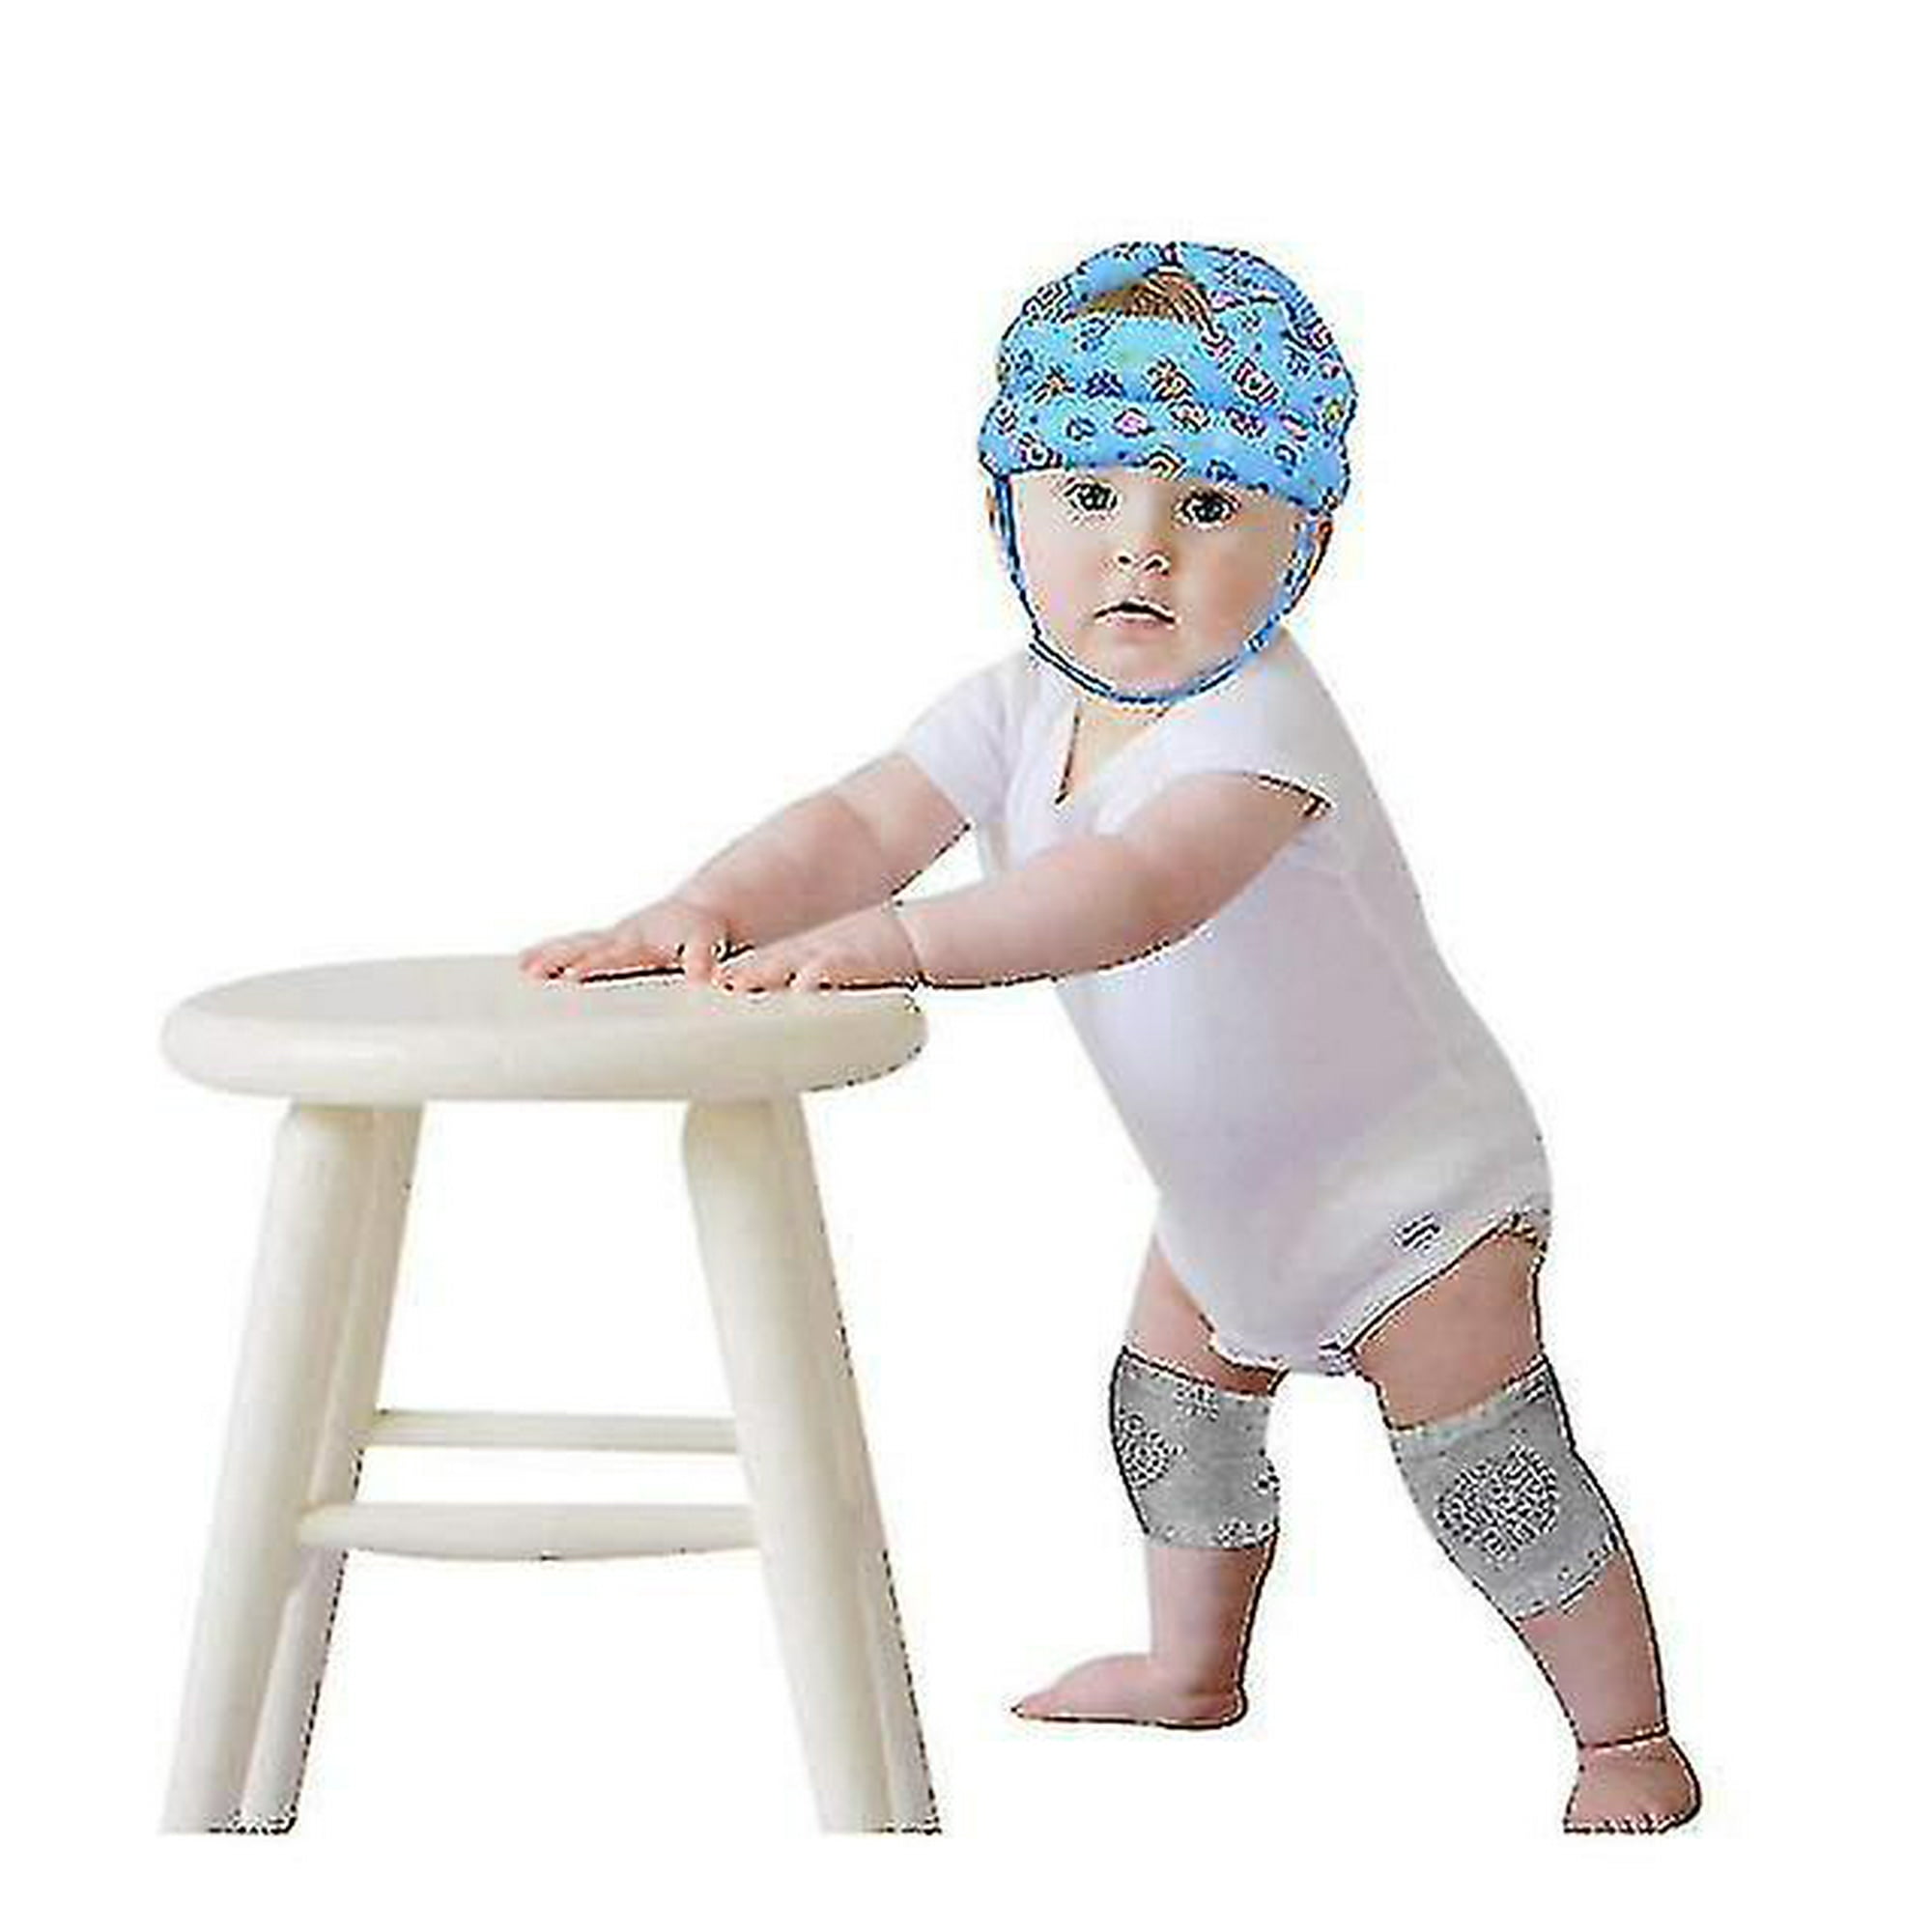  Casco de seguridad para bebés pequeños, protector de cabeza  ajustable, arnés para aprender a gatear, caminar, jugar tocados : Bebés